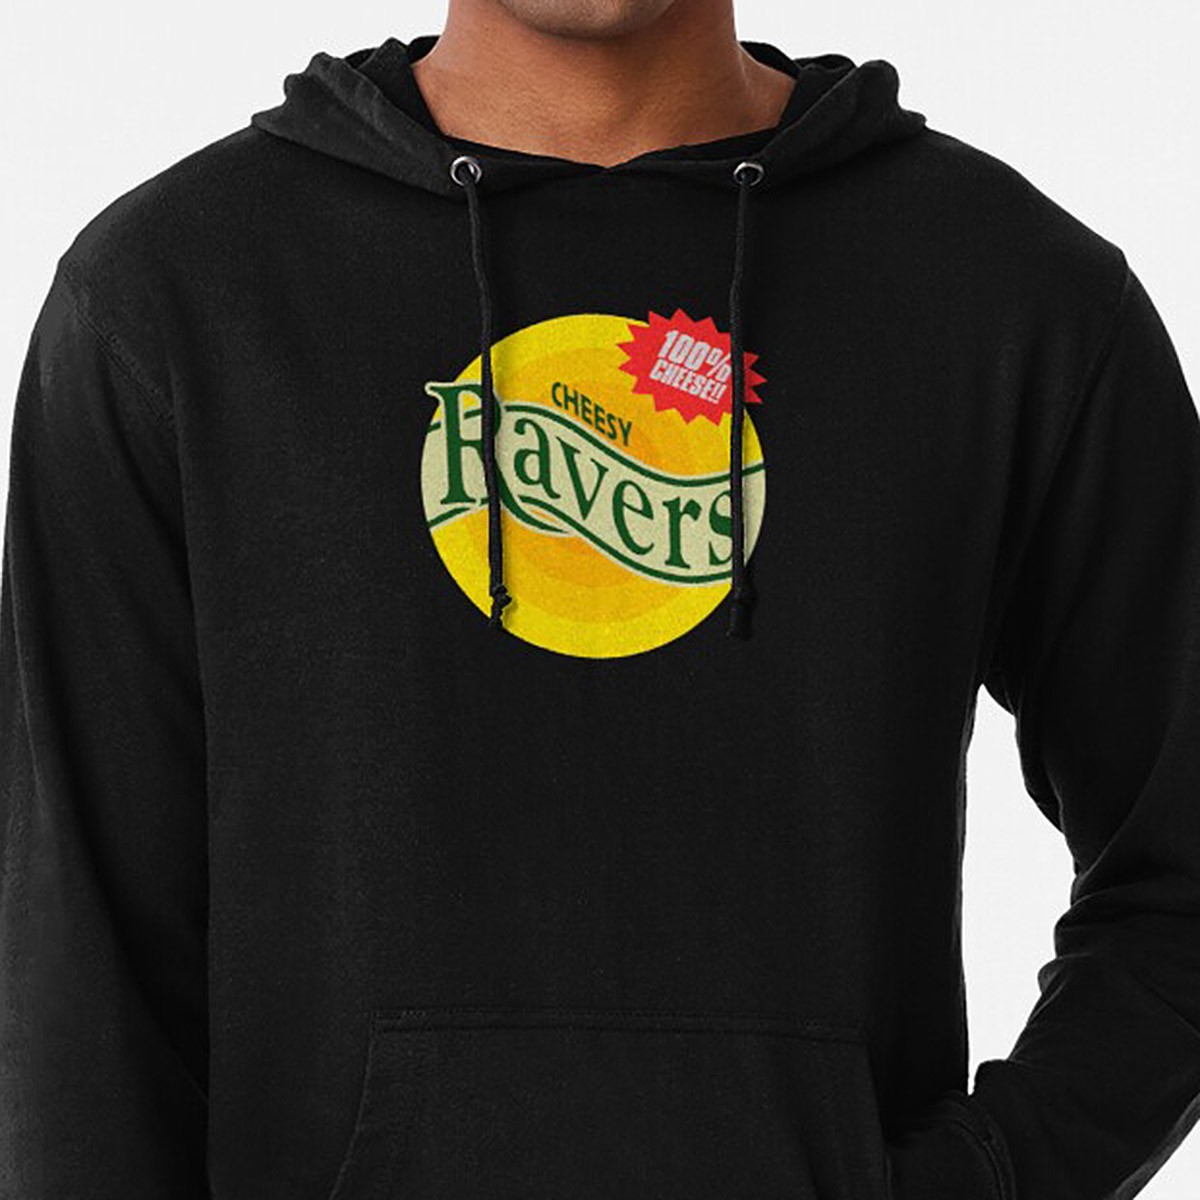 100% Cheesy Ravers!  Lightweight hoodie - 